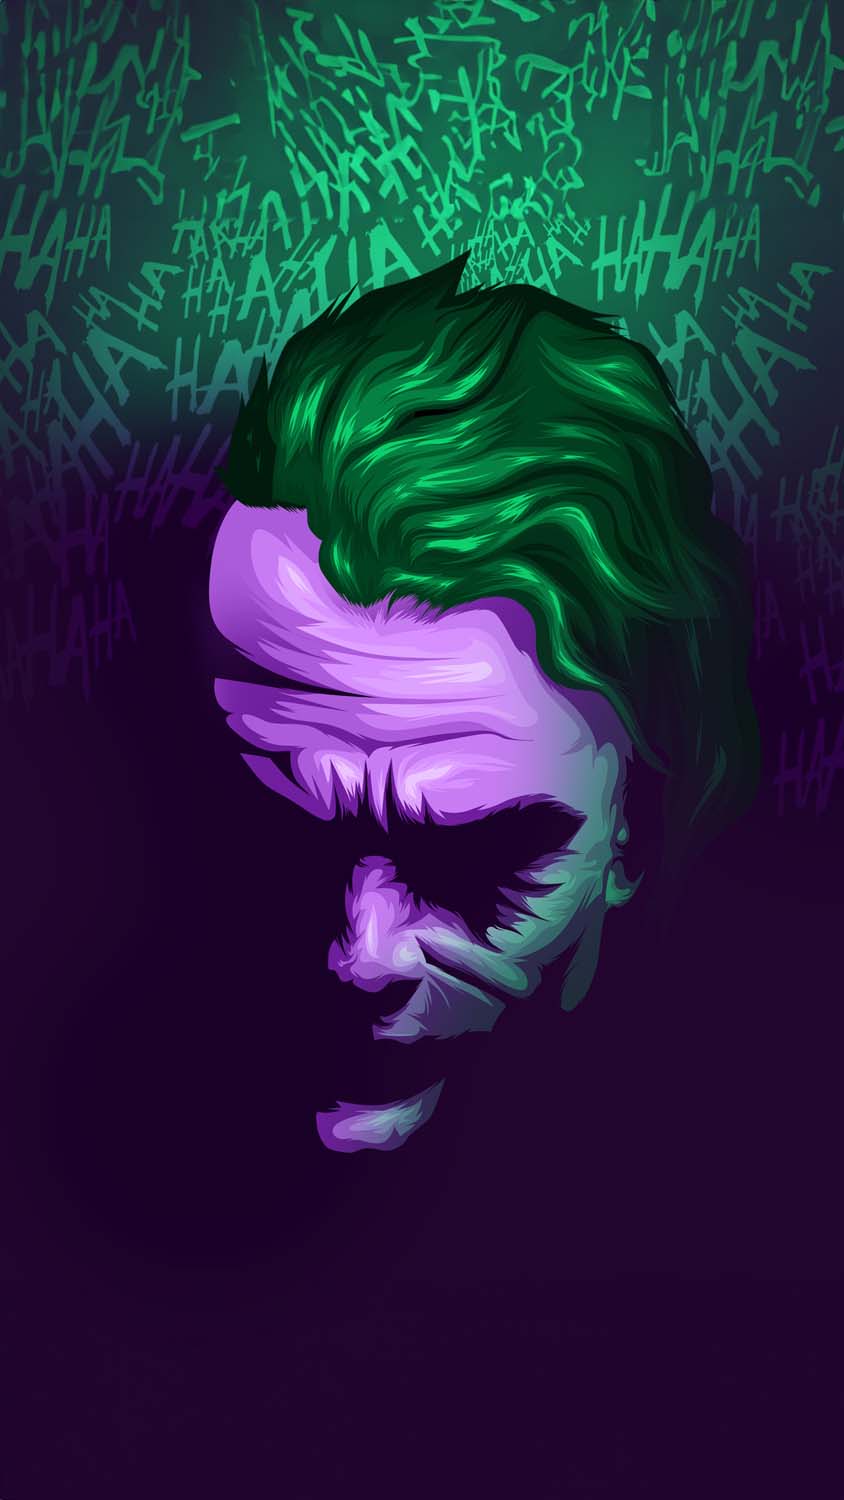 Joker Madness unleashed iPhone Wallpaper